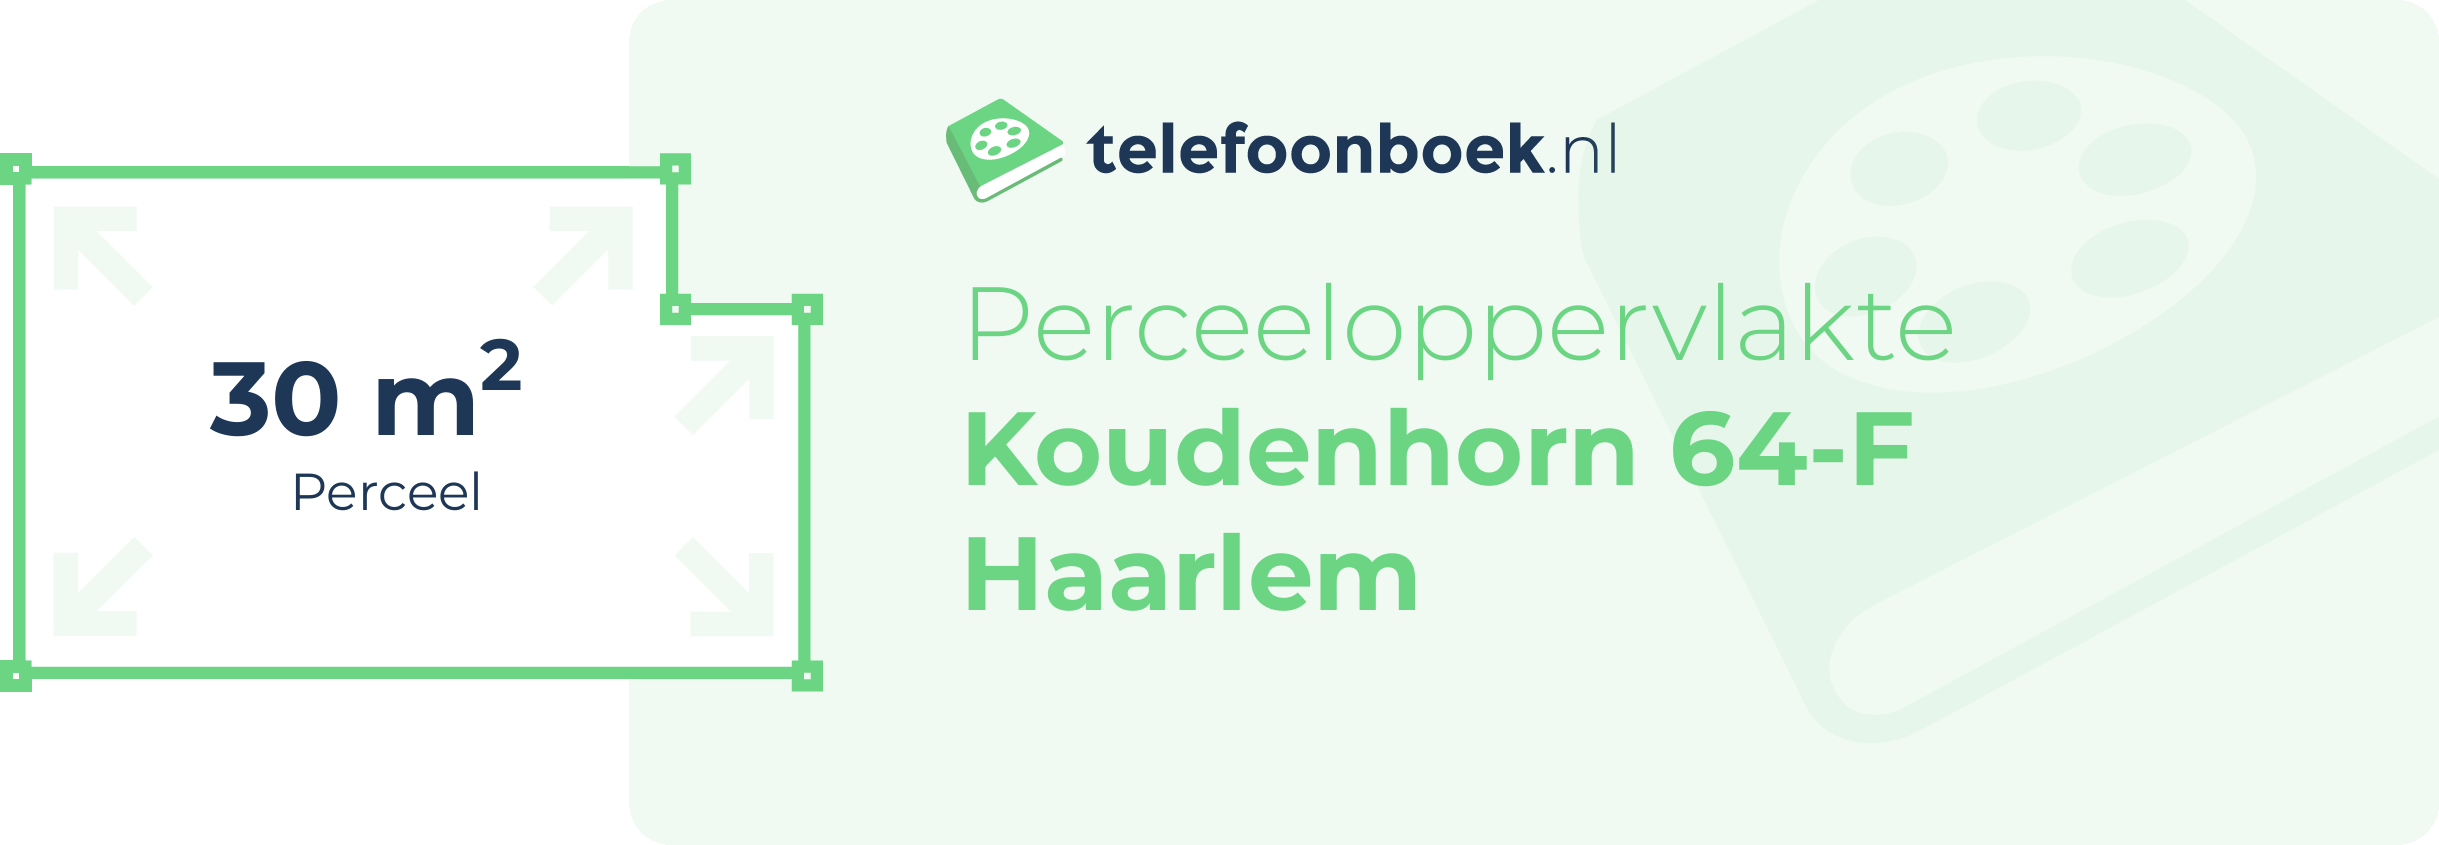 Perceeloppervlakte Koudenhorn 64-F Haarlem